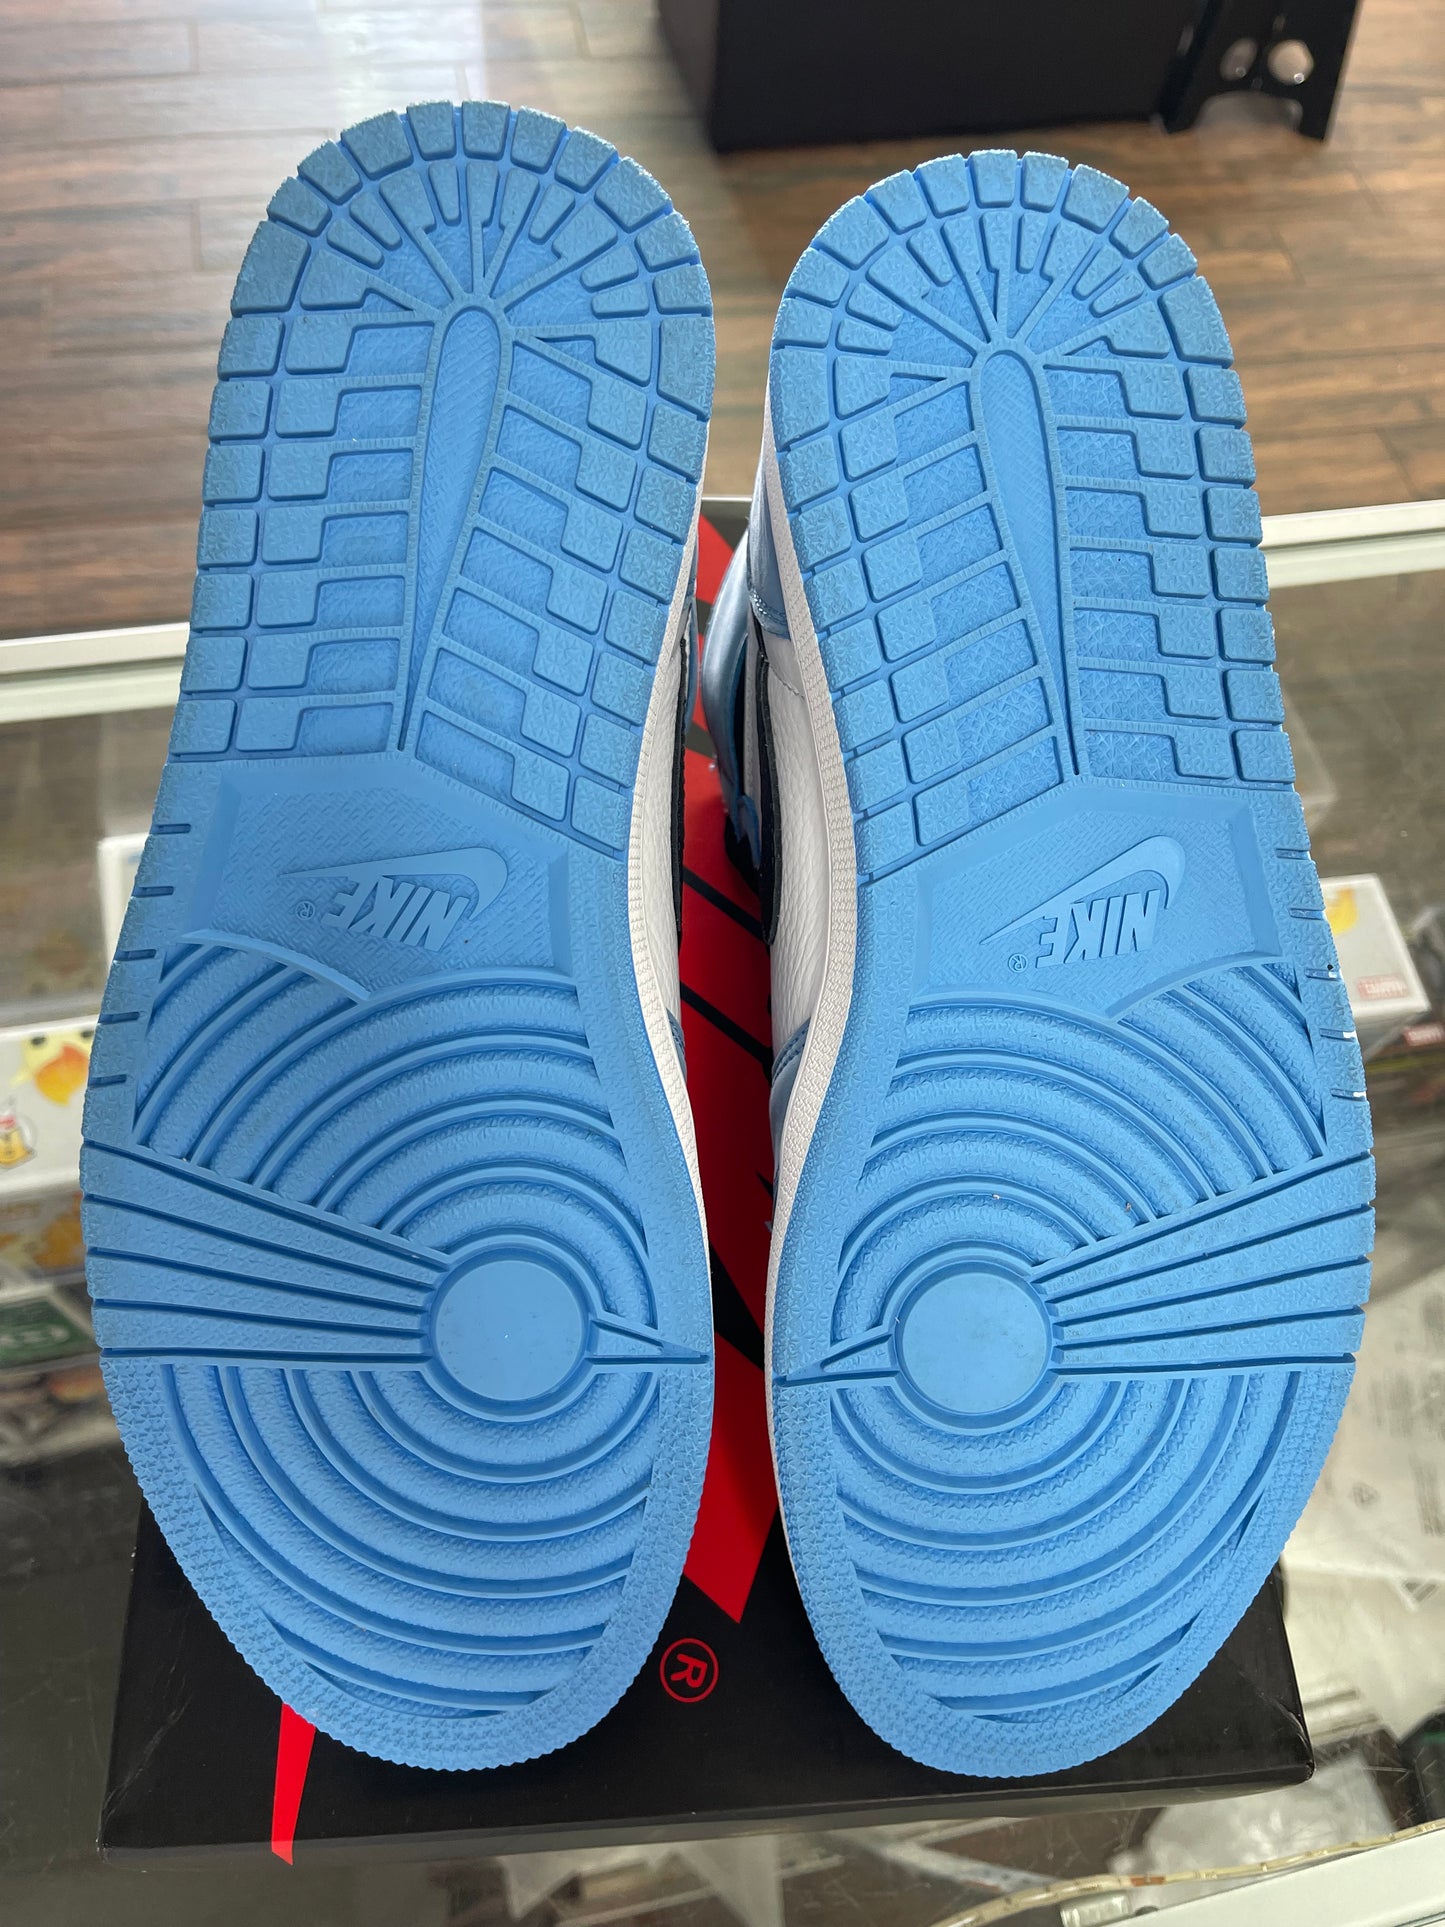 Air Jordan Retro 1 High OG ‘ University Blue ‘ Size 10